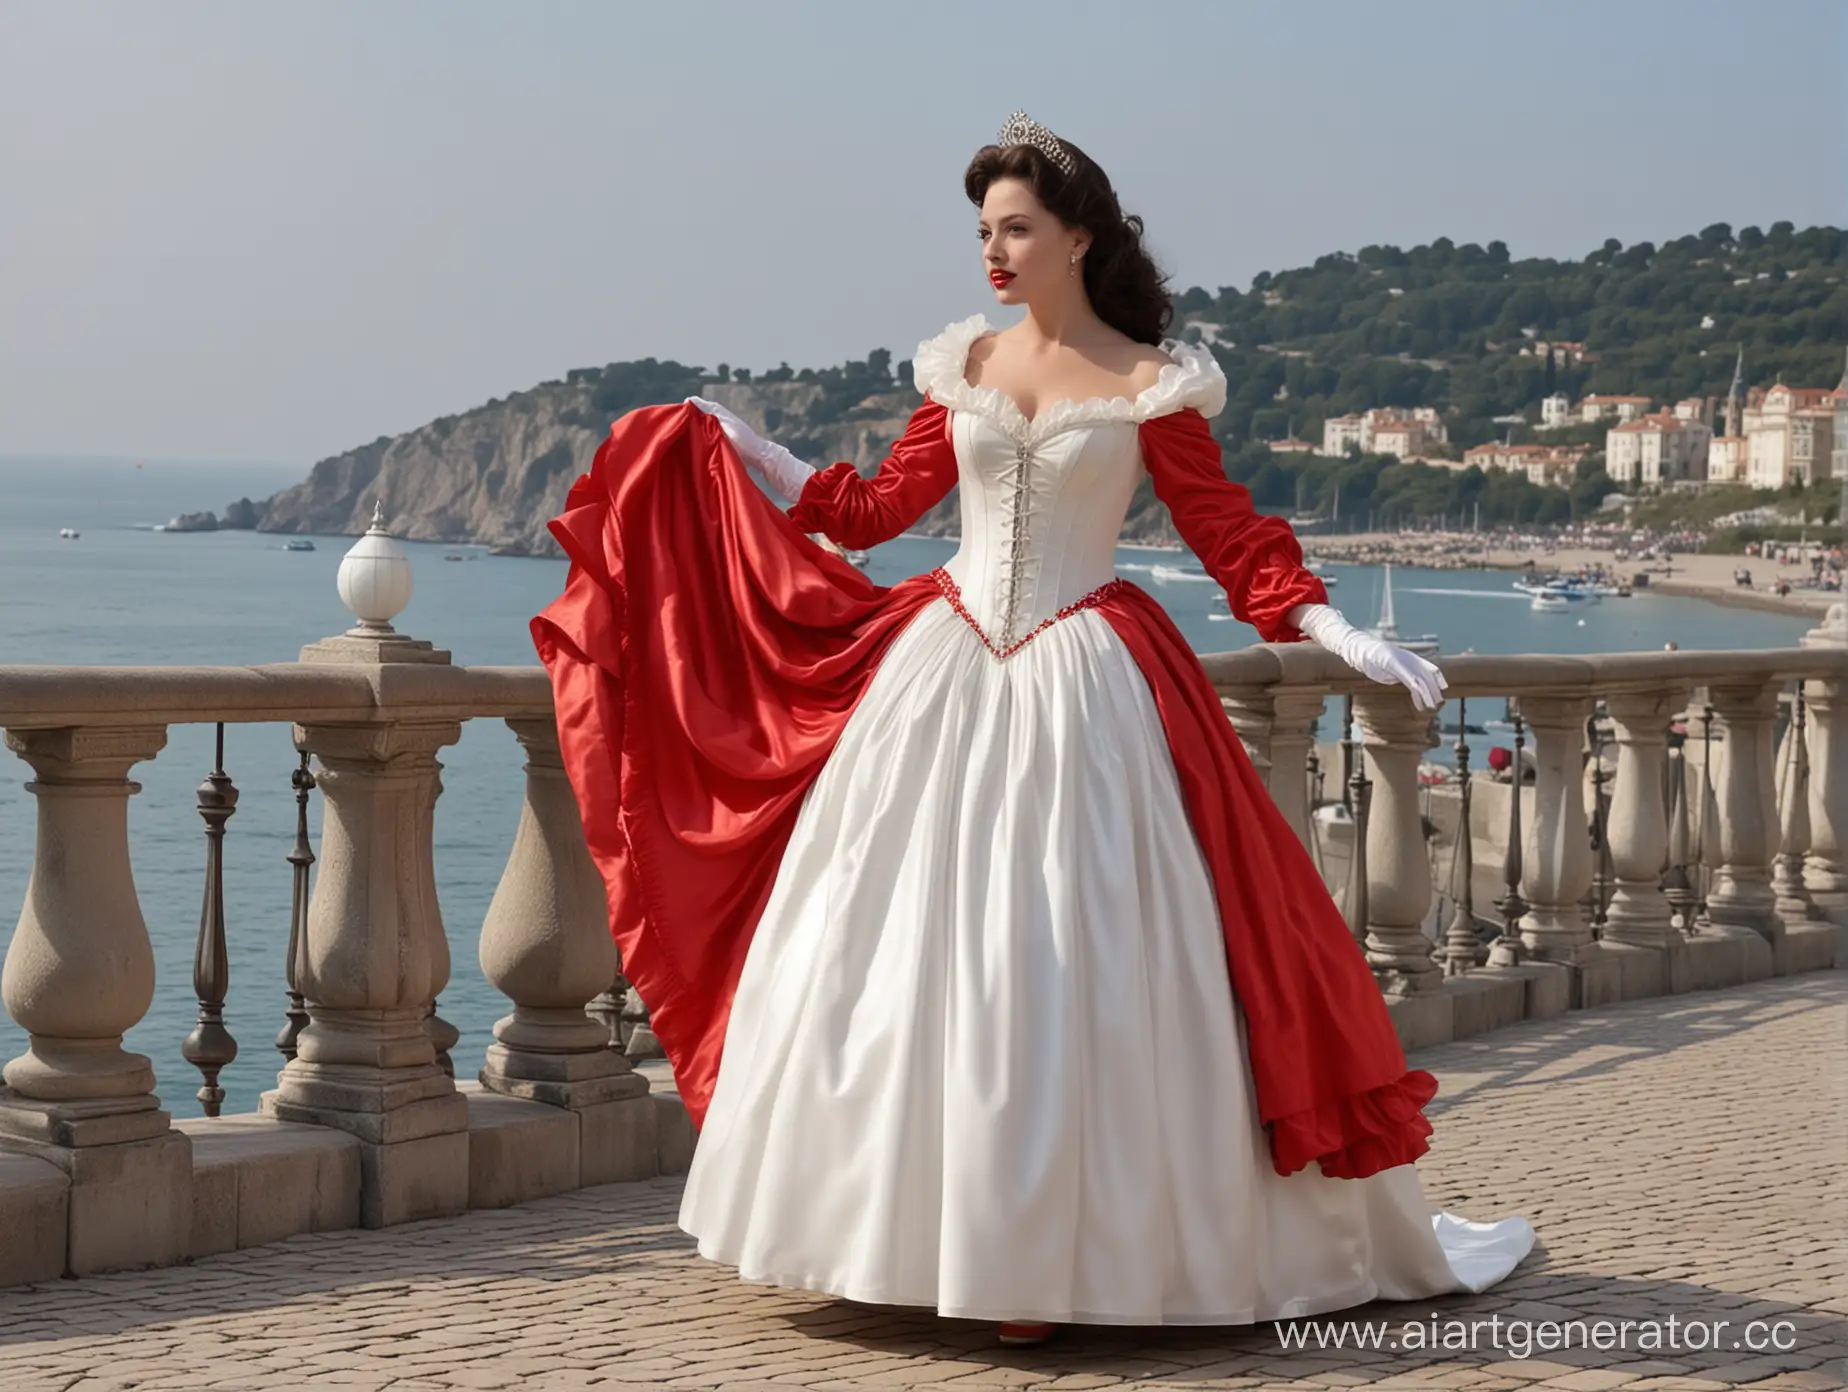 Regal-Red-Dress-Queens-Elegant-Seaside-Stroll